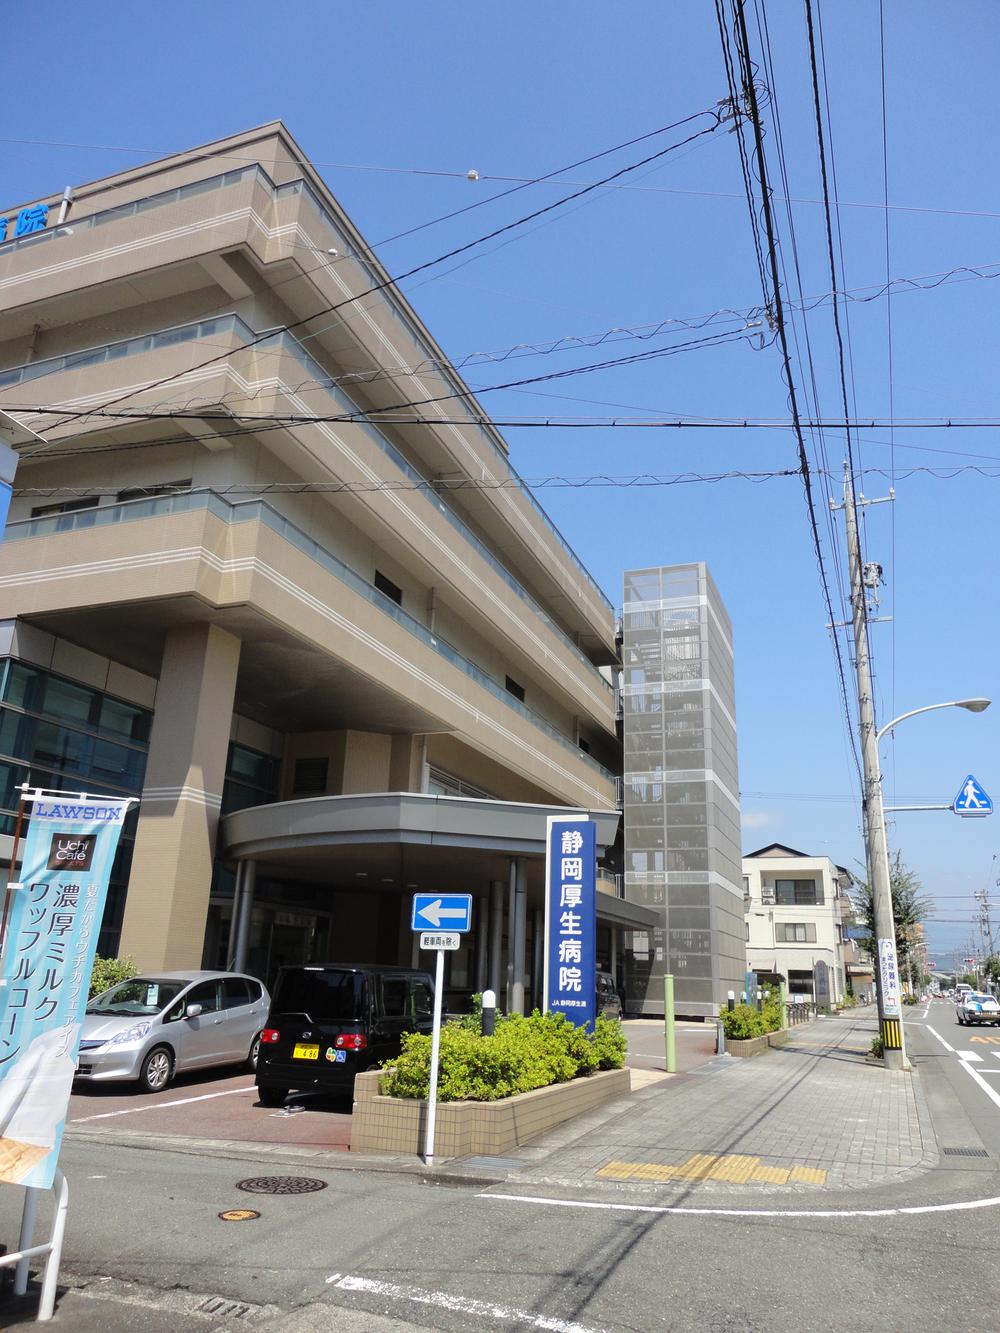 Hospital. 514m until JA Shizuoka Koseiren Shizuoka Welfare Hospital